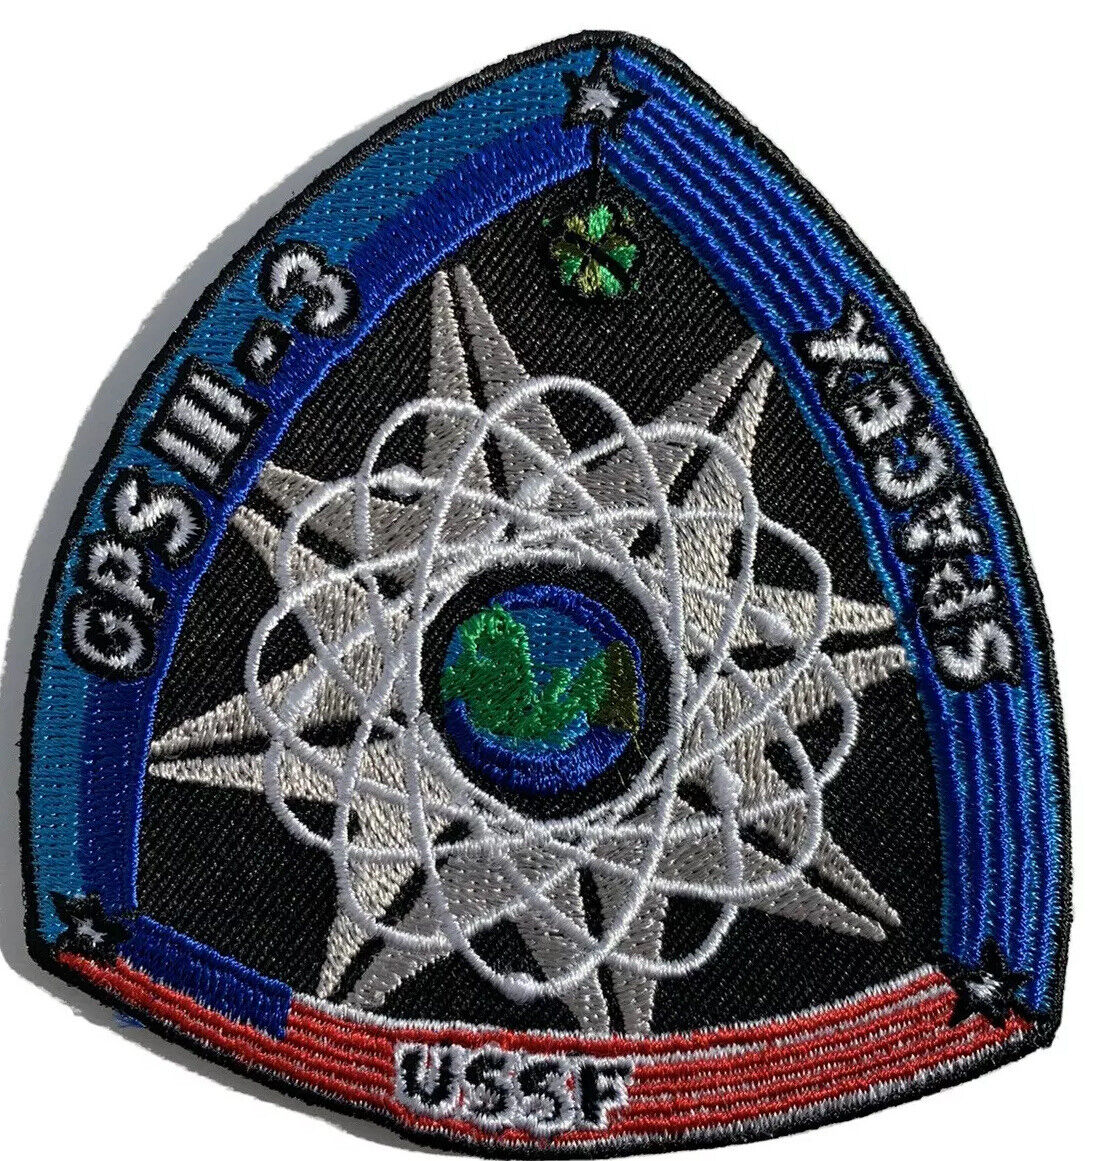 SPACE X Mission GPS III-SVO 3 USSF DM2 PATCH 3.5”